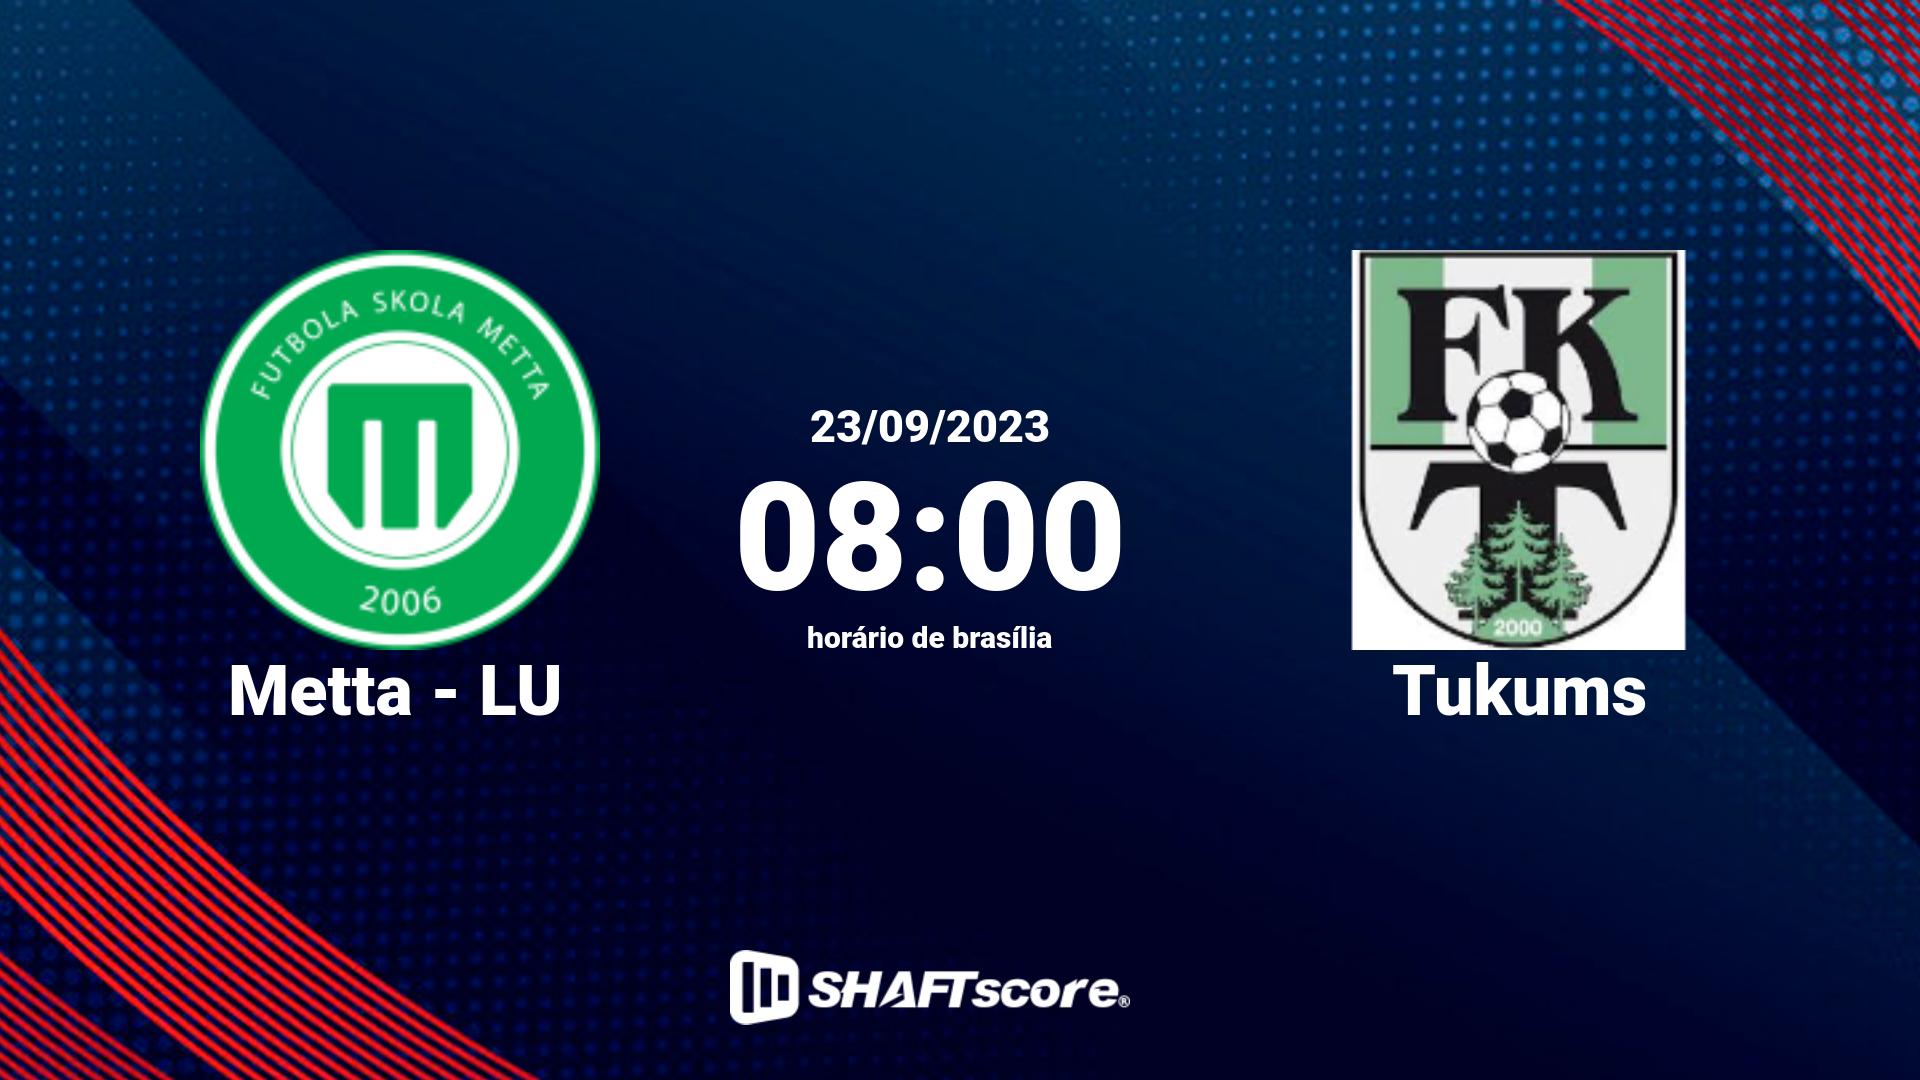 Estatísticas do jogo Metta - LU vs Tukums 23.09 08:00